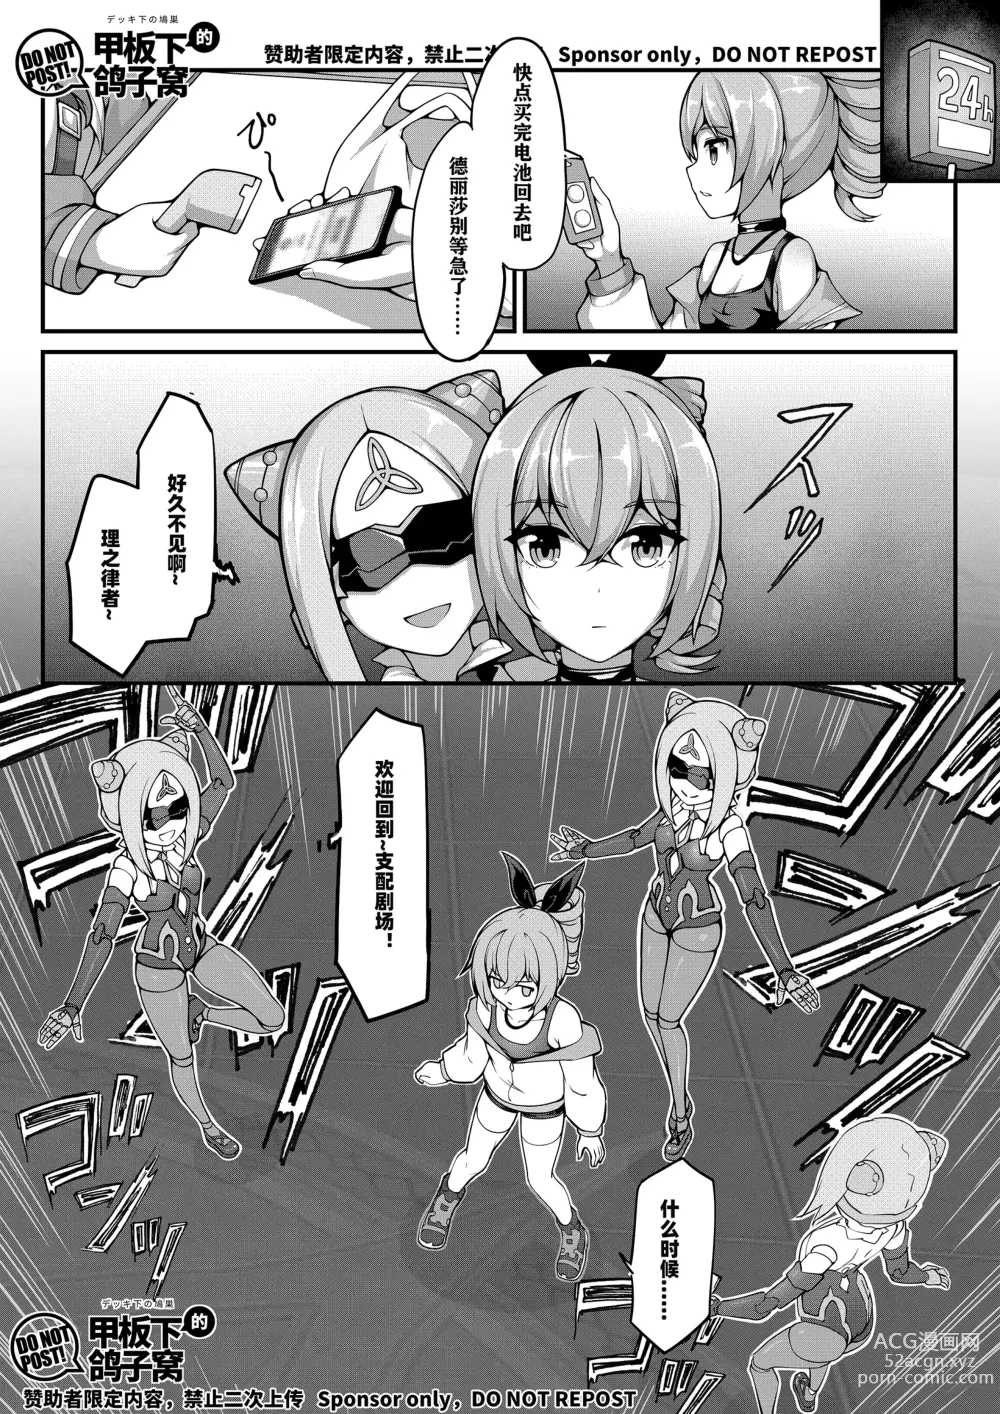 Page 3 of manga 银狼奇遇